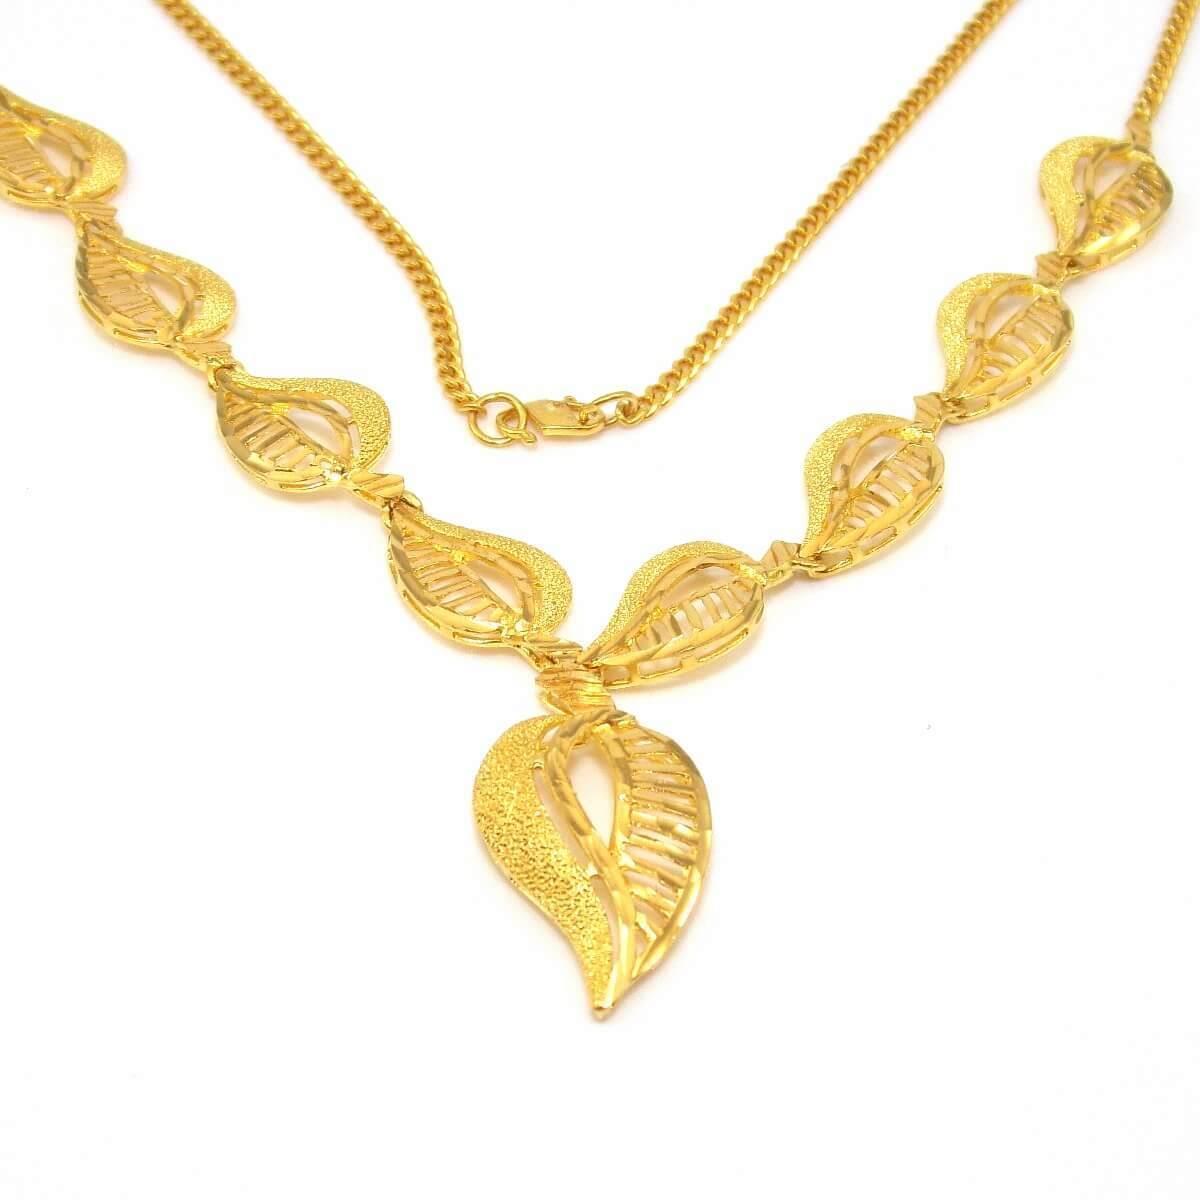 22K Yellow Gold Diamond Cut Brushed Necklace 16.5" - image 1